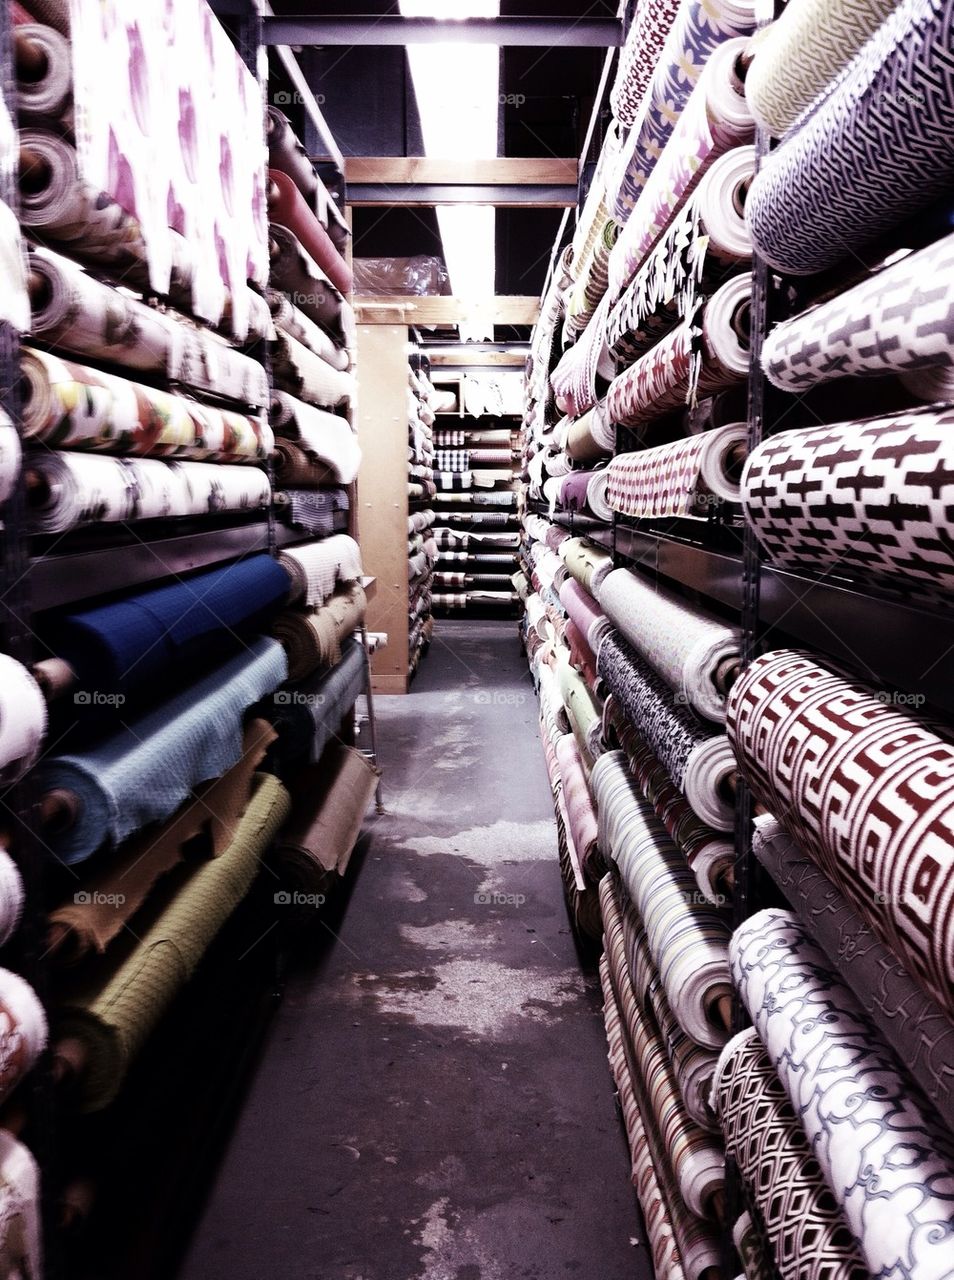 Miles of Fabric